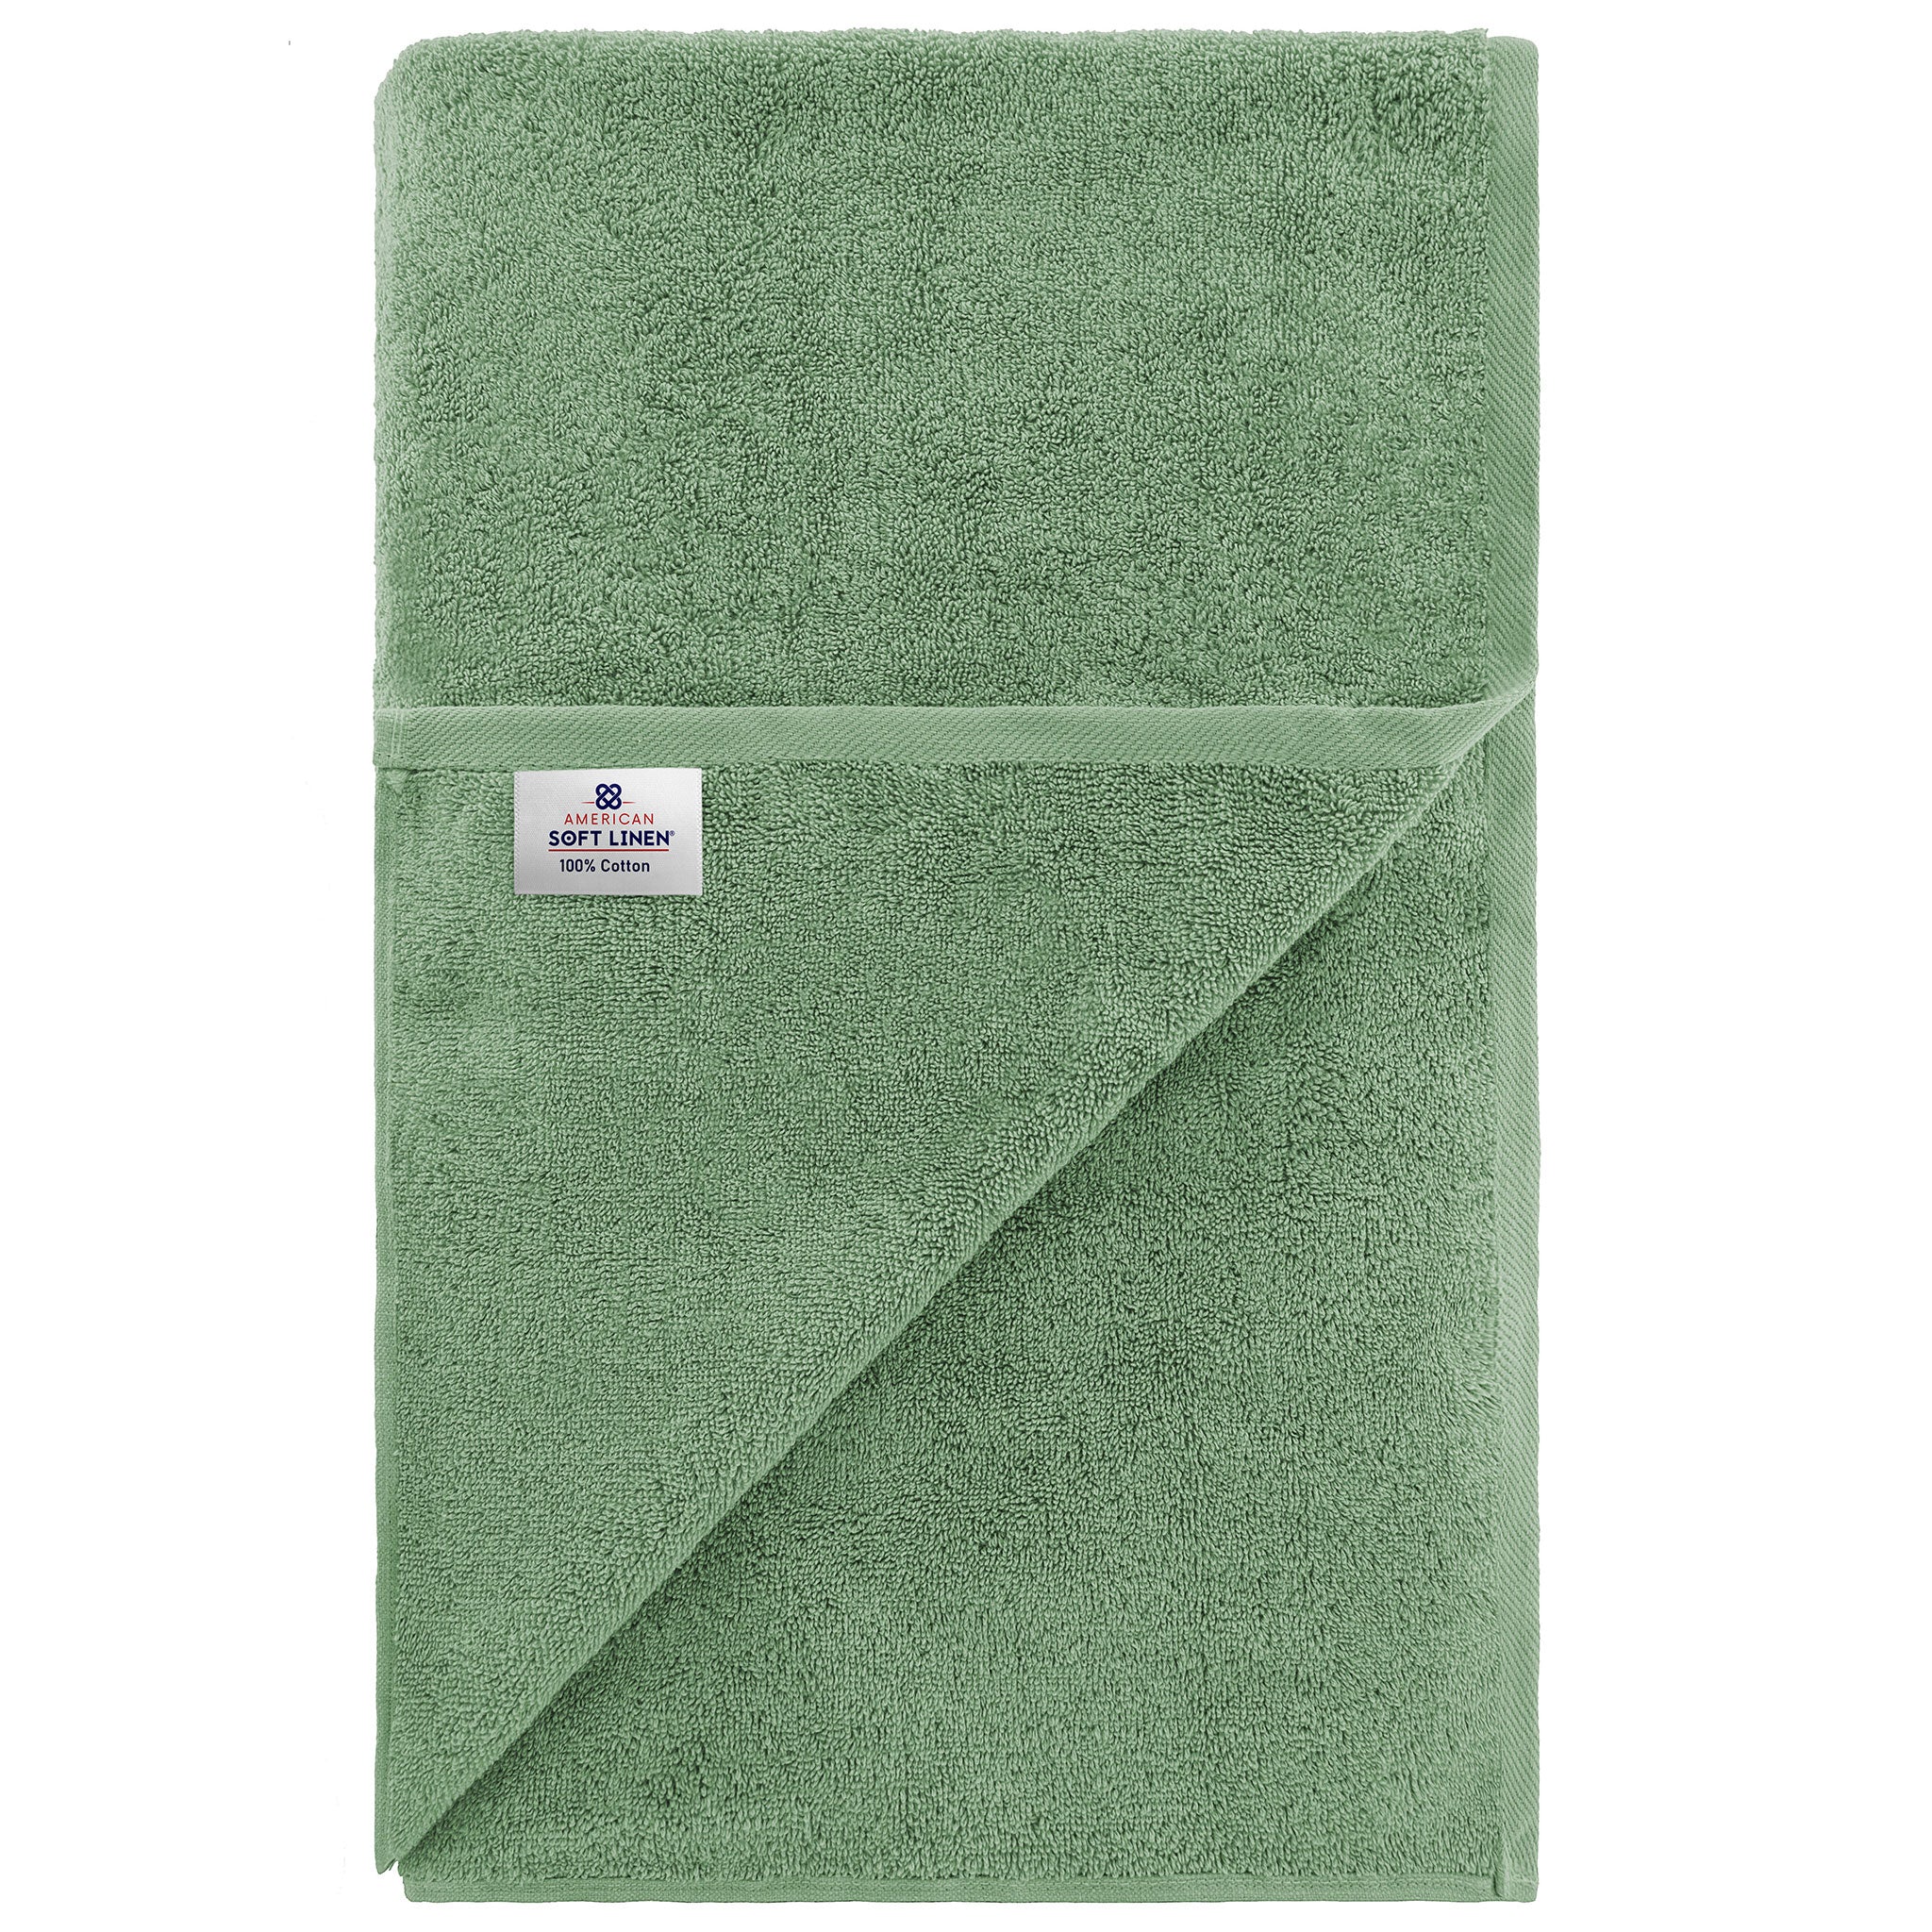 American Soft Linen - 40x80 Inch Oversized Bath Sheet Turkish Bath Towel - 12 Piece Case Pack - Sage-Green - 6